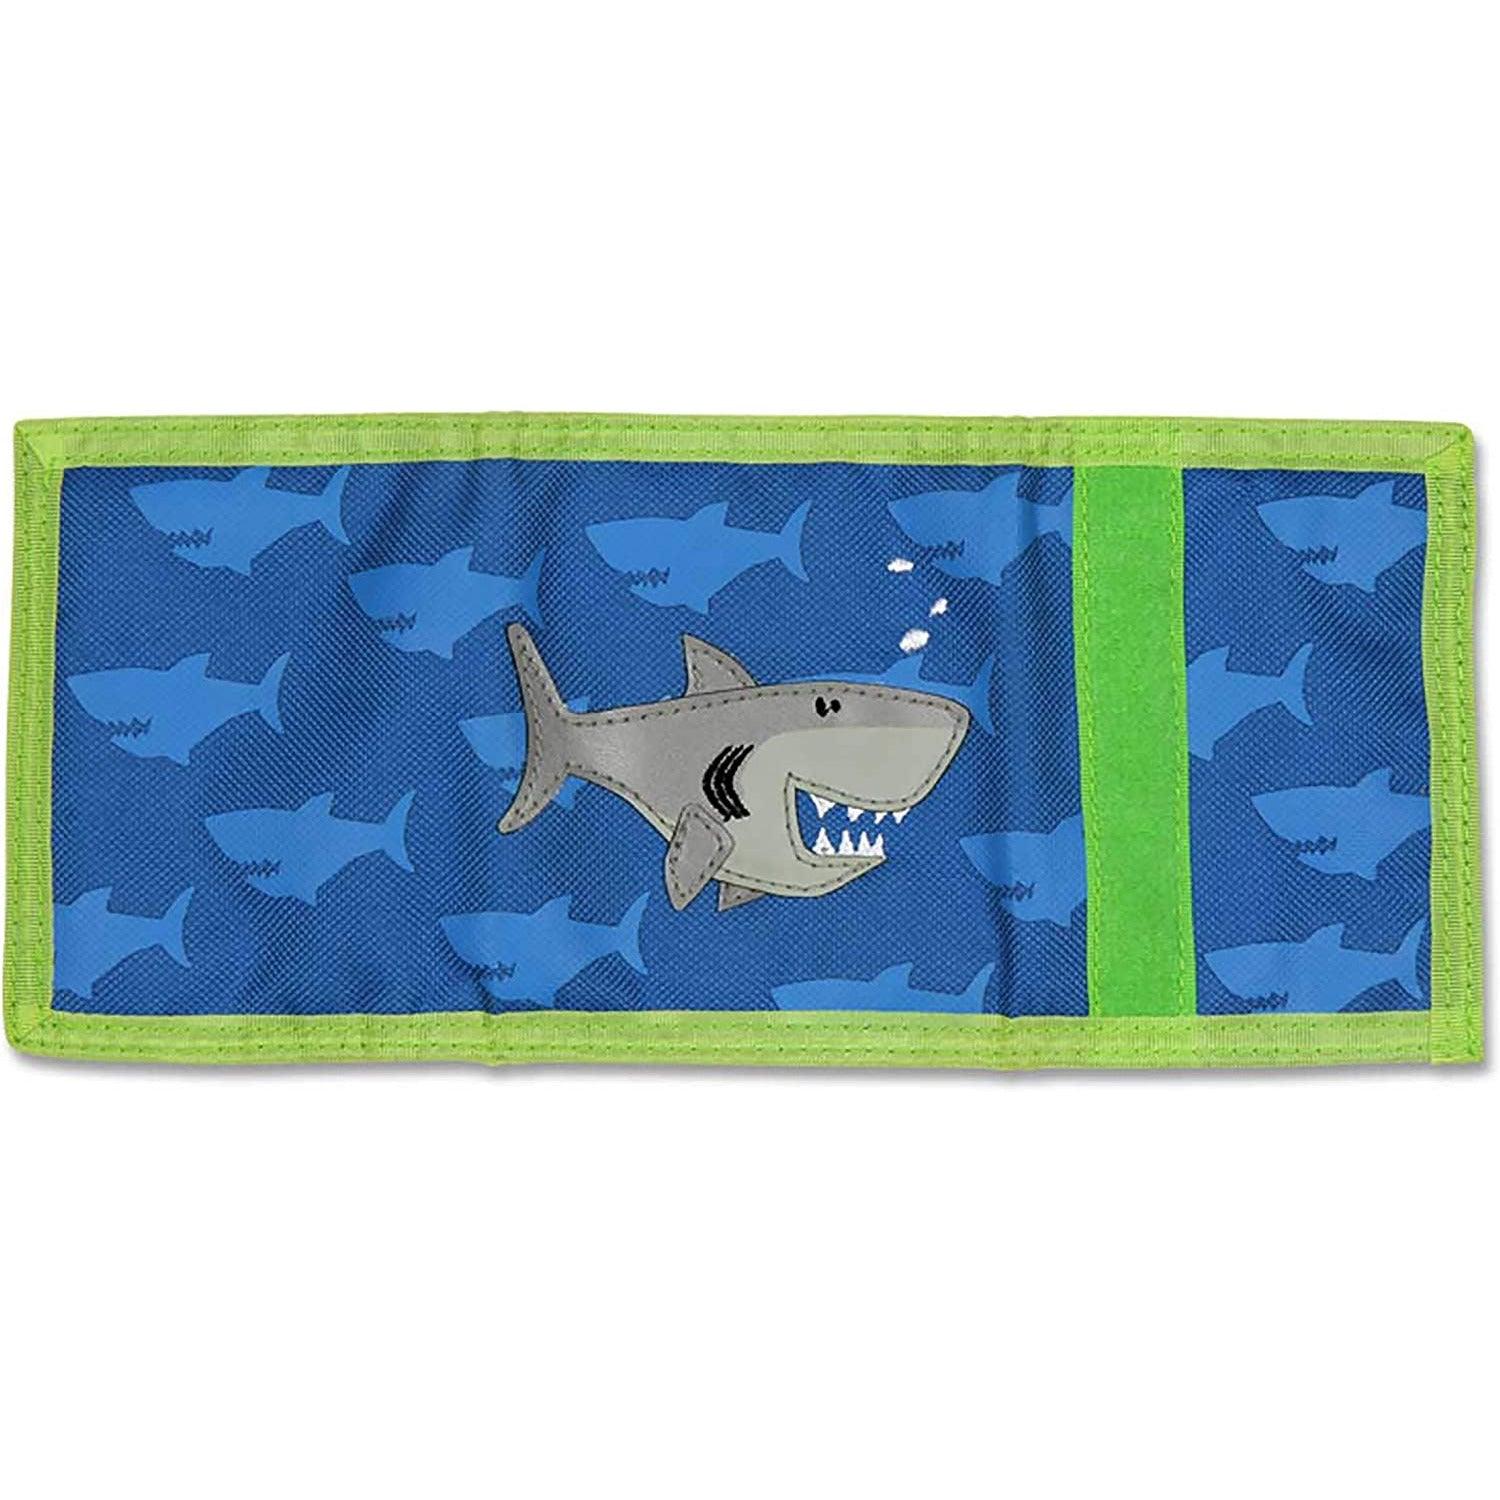 Stephen Joseph Kids Wallet One Size - Shark - BumbleToys - 14 Years & Up, 5-7 Years, 8-13 Years, Baby Shark, Bags, Boys, Characters, Girls, Shark, Stephen Joseph, Wallet